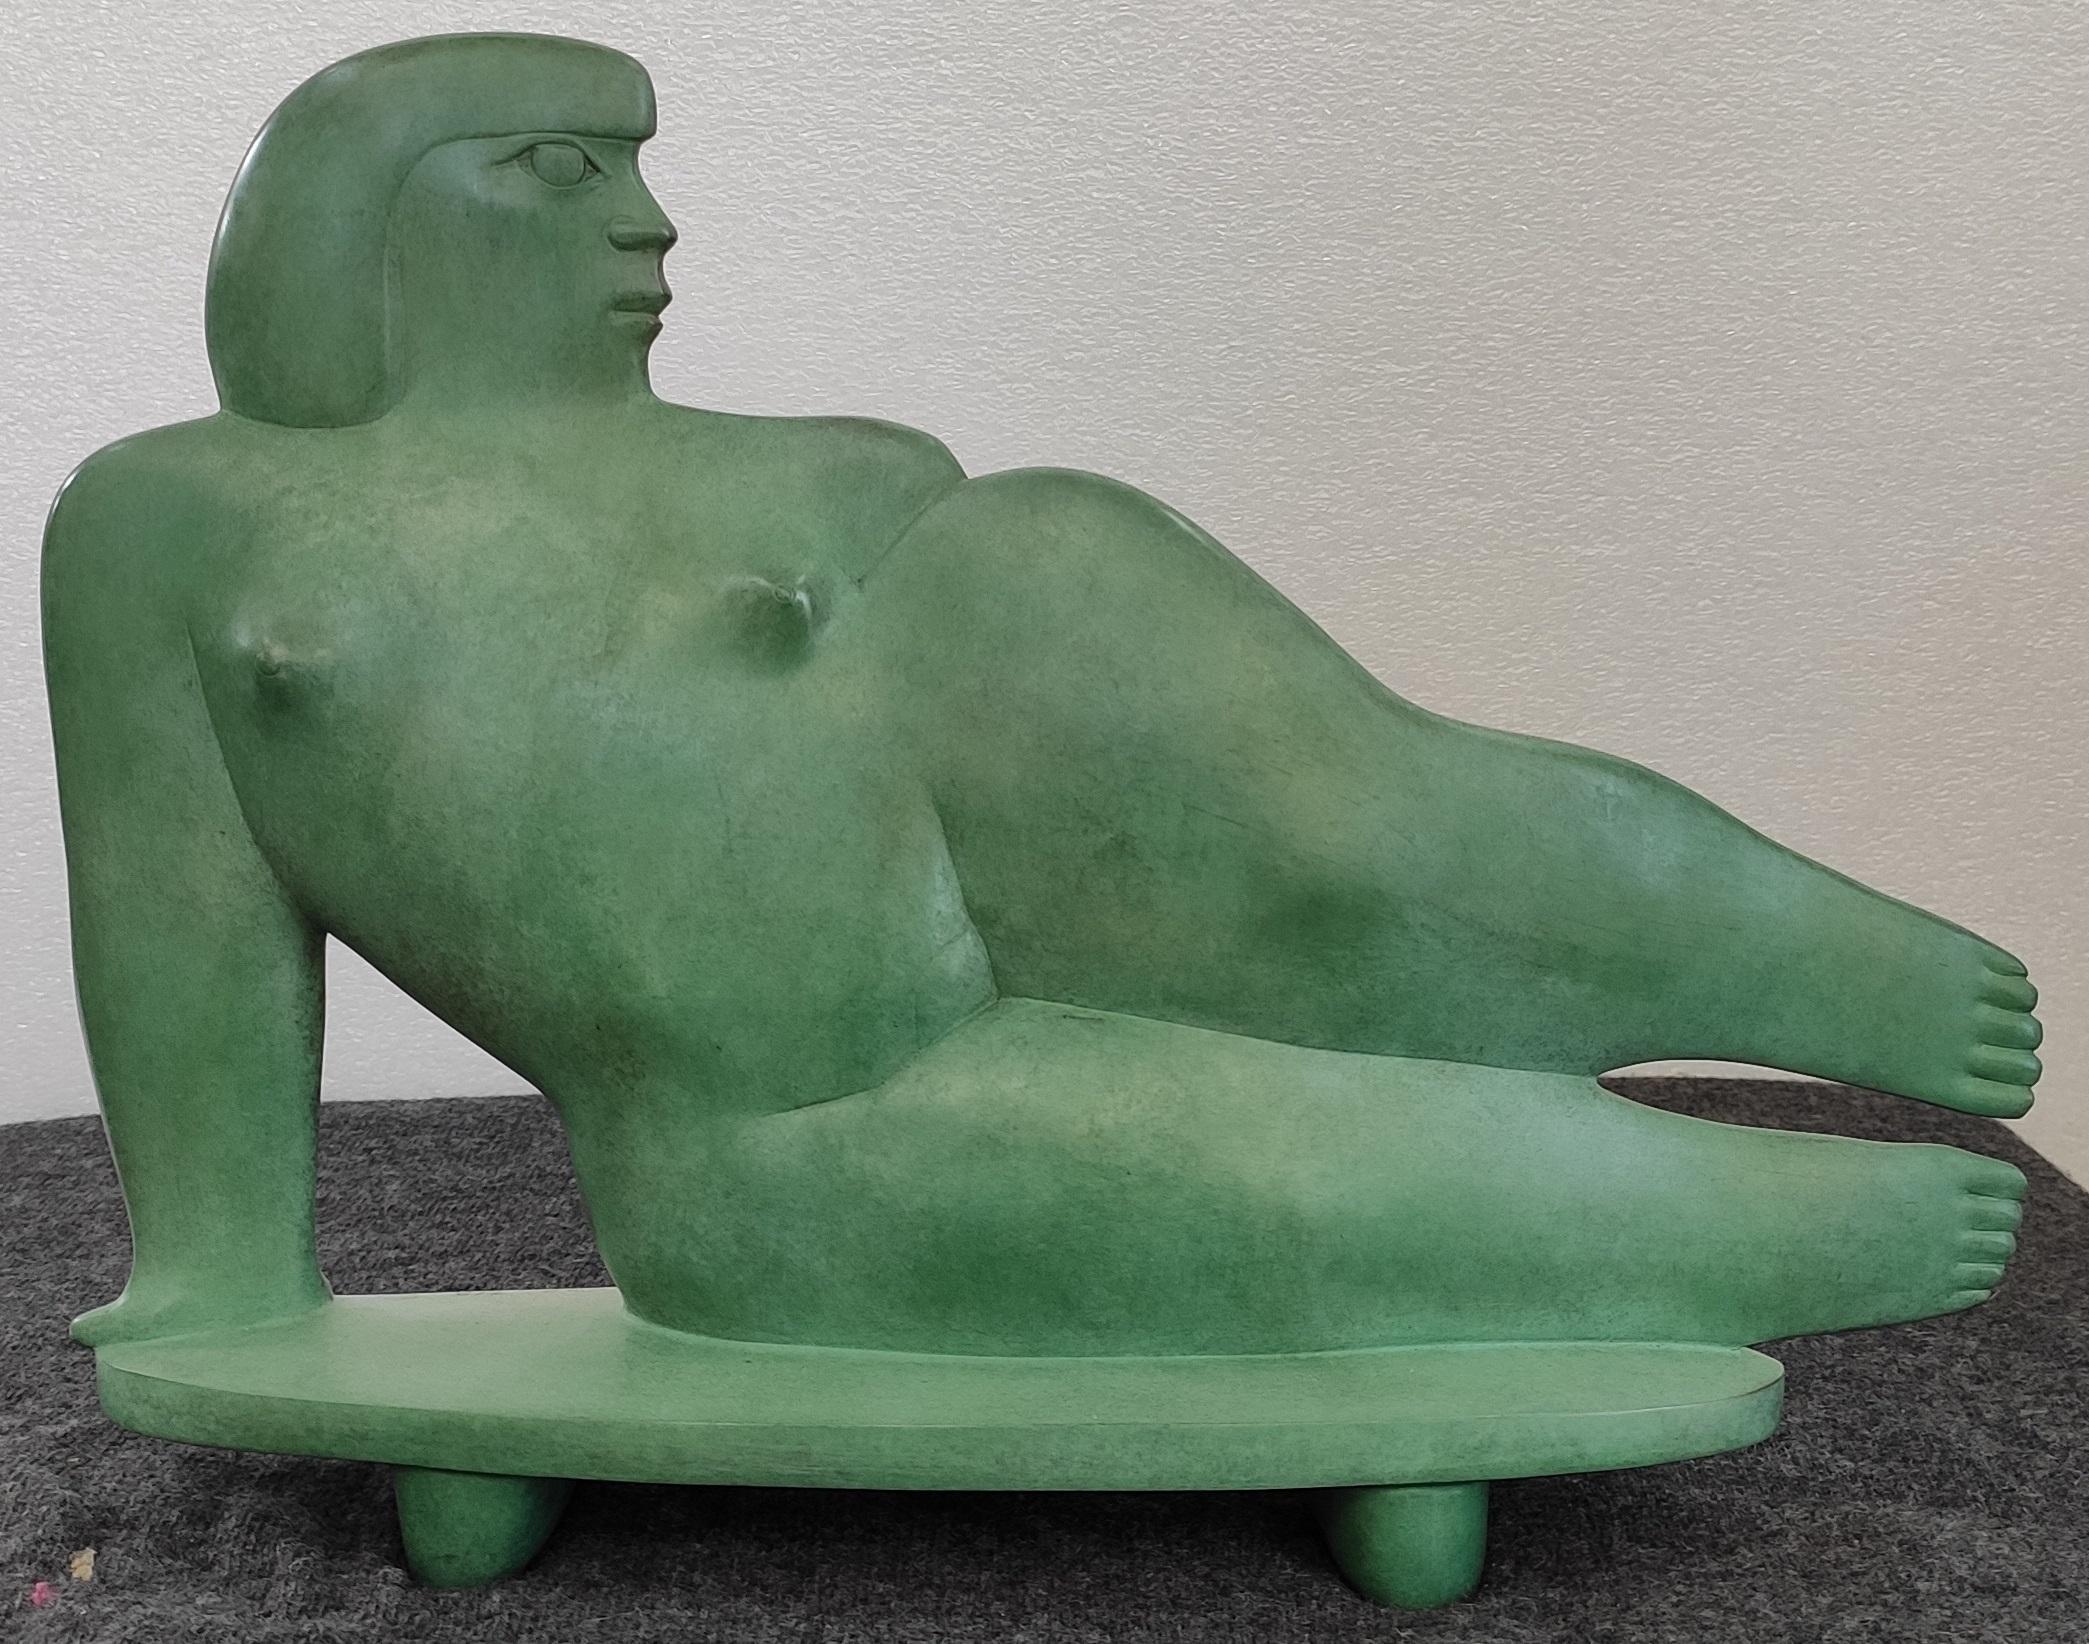 KOBE Nude Sculpture - Miss Bronze Sculpture Lady Lying Down Female Figure Woman Nude